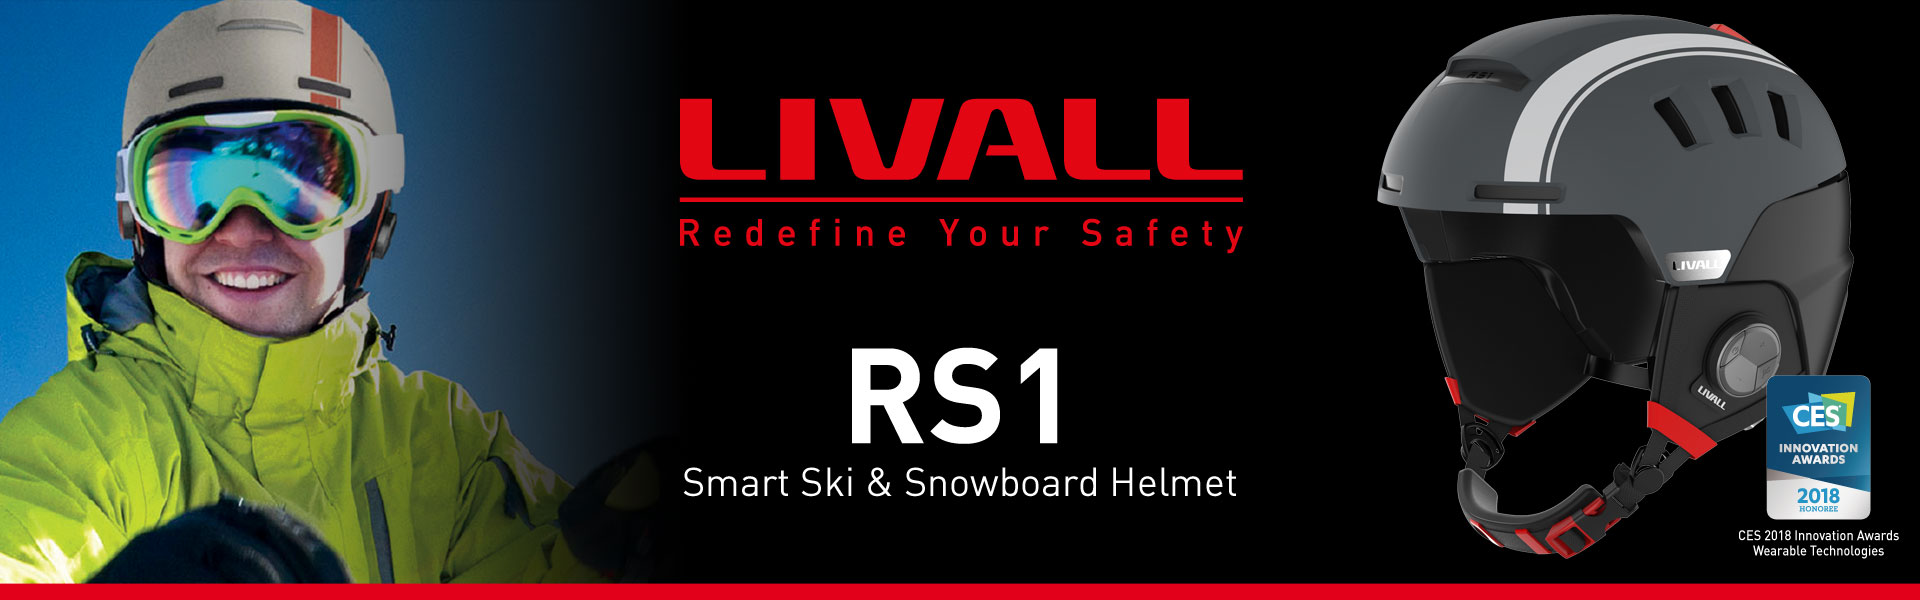 Livall-RS1-Banner